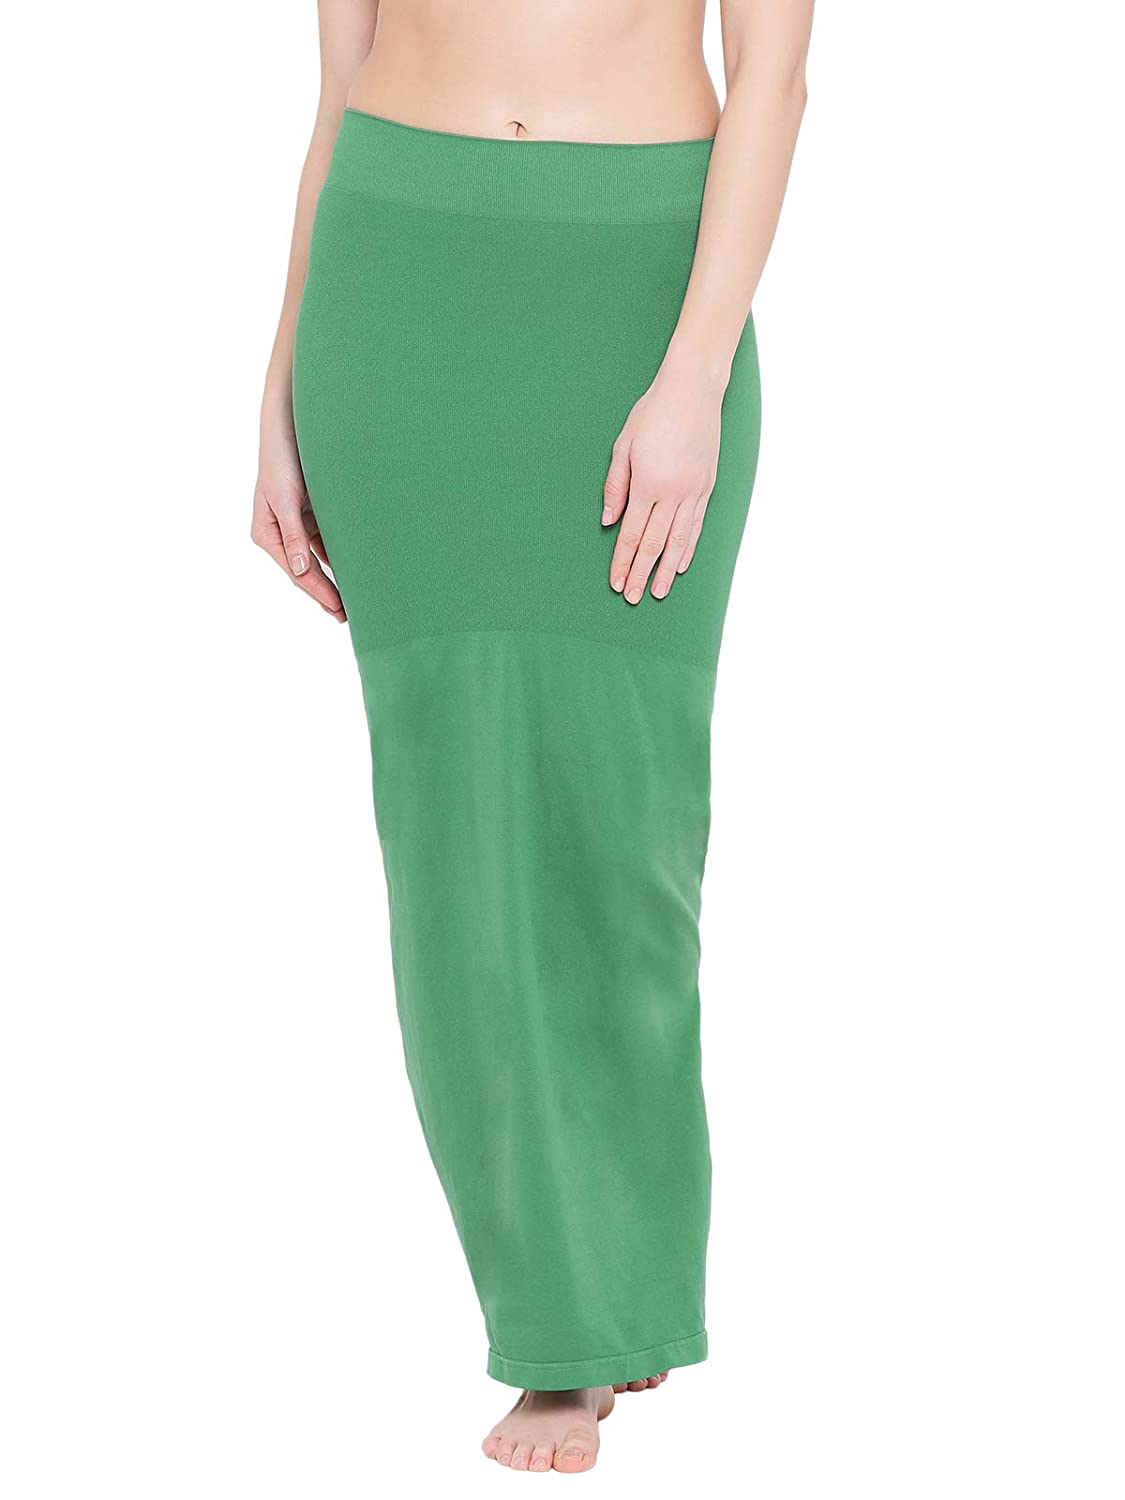 Clovia Women's Saree Shapewear Green Color Petticoat